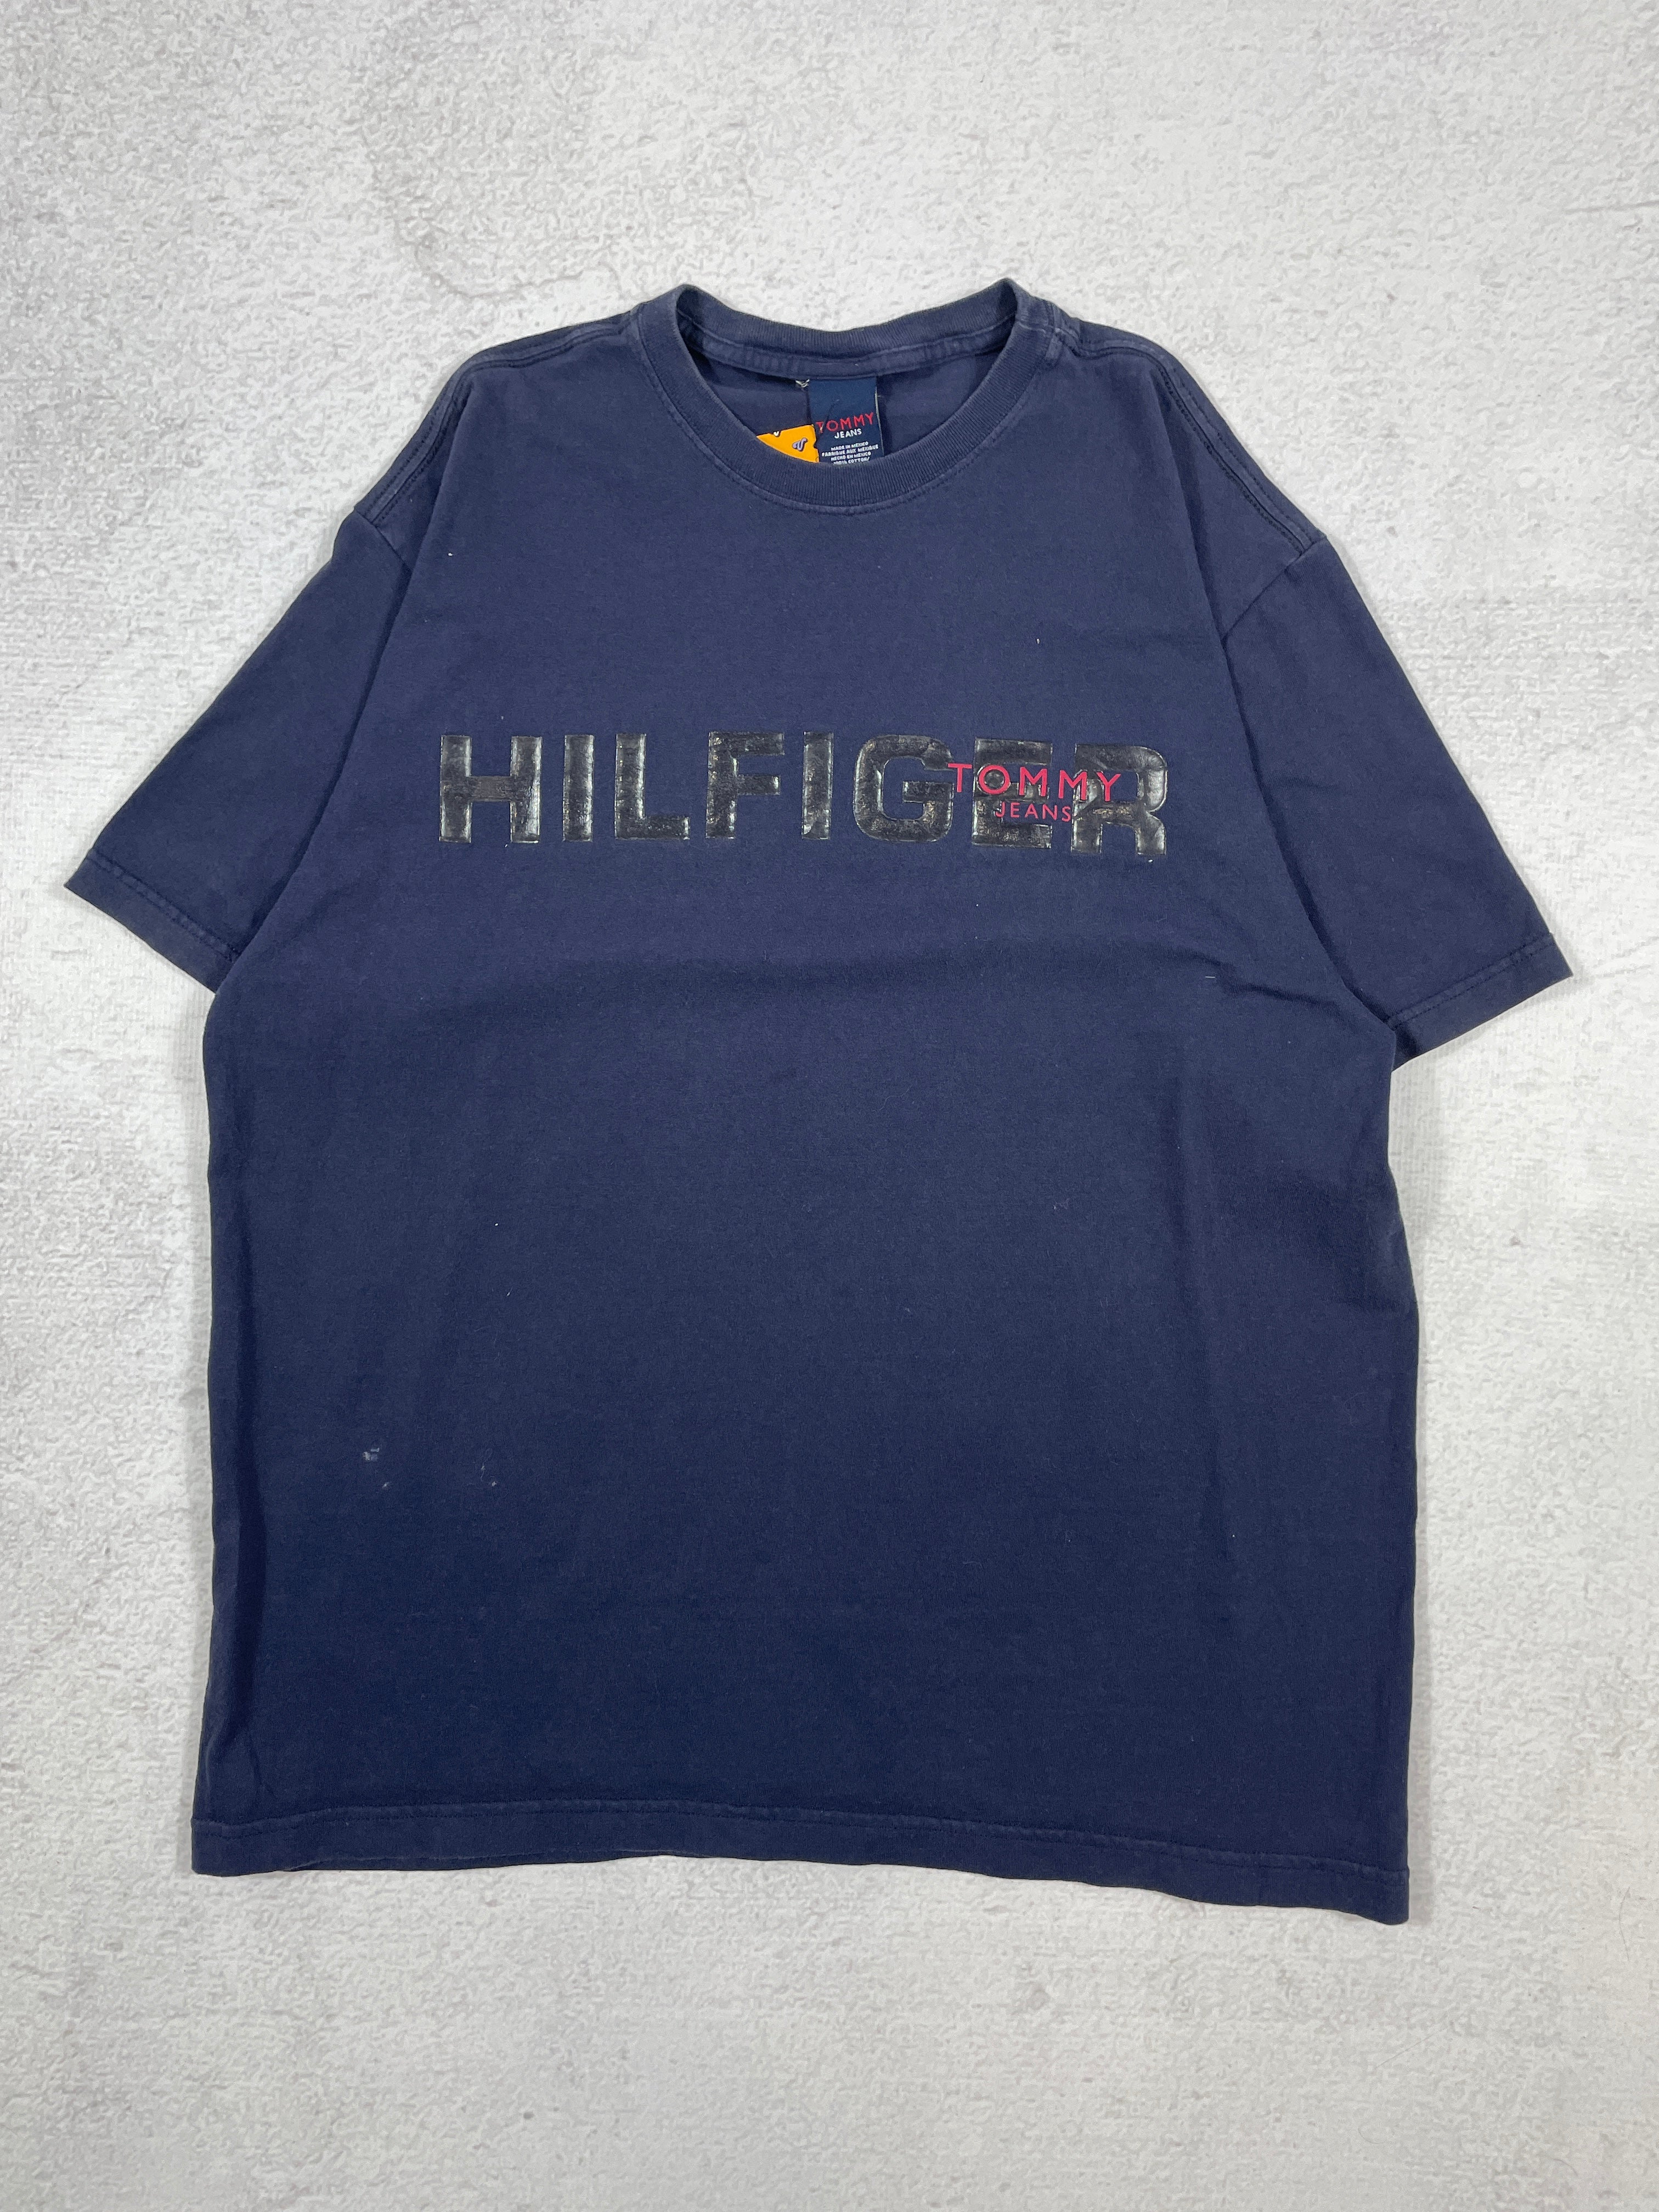 Vintage Tommy Hilfiger Graphic T-Shirt - Men's XL